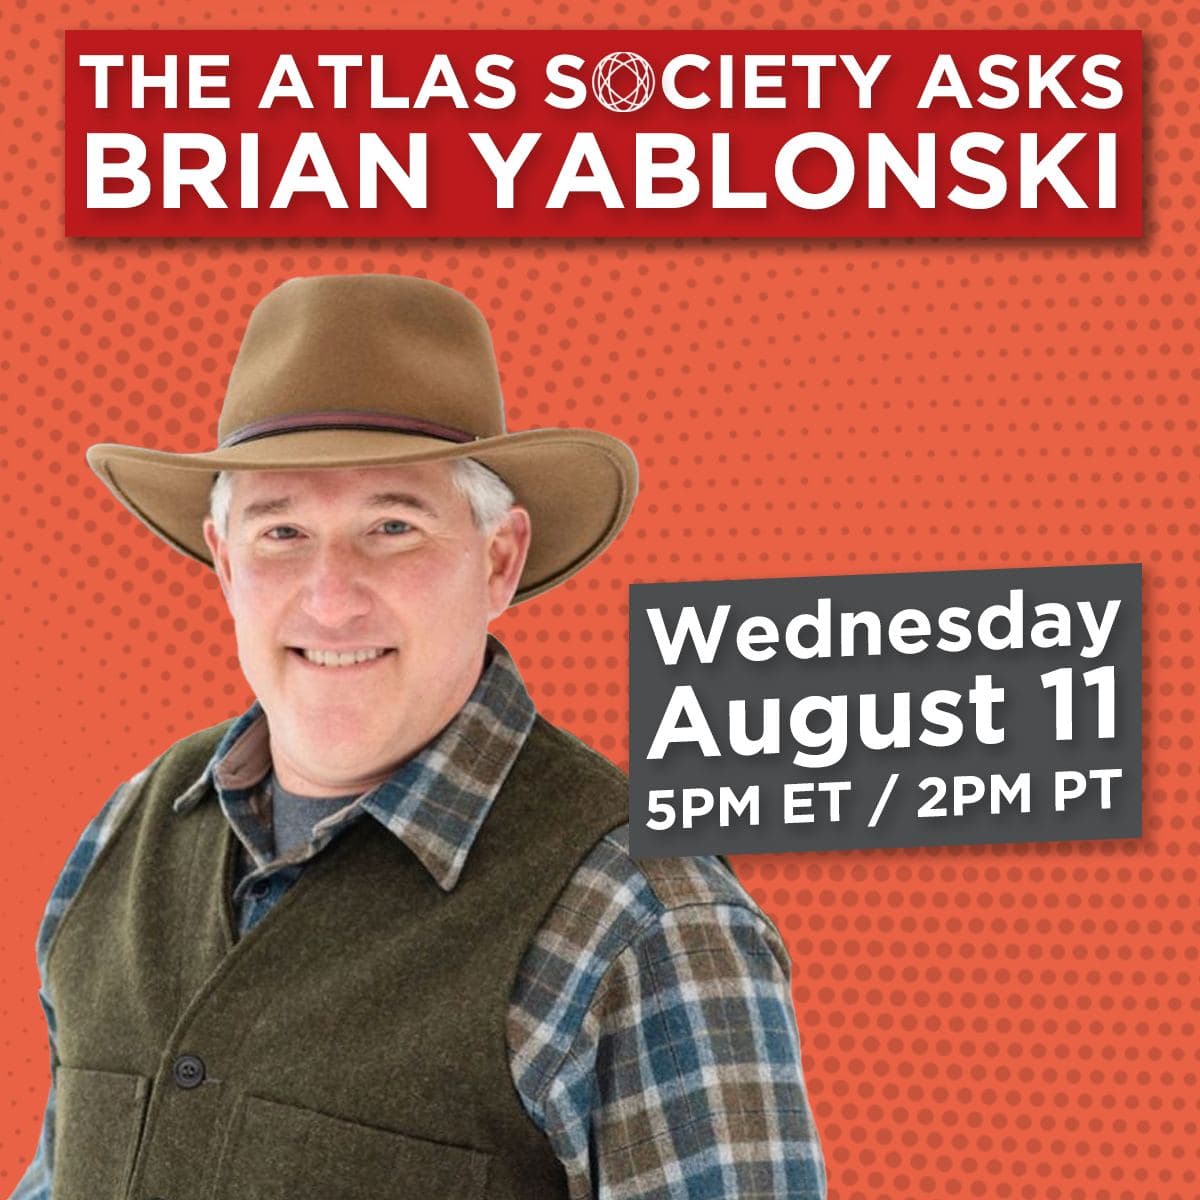 The Atlas Society Asks Brian Yablonski